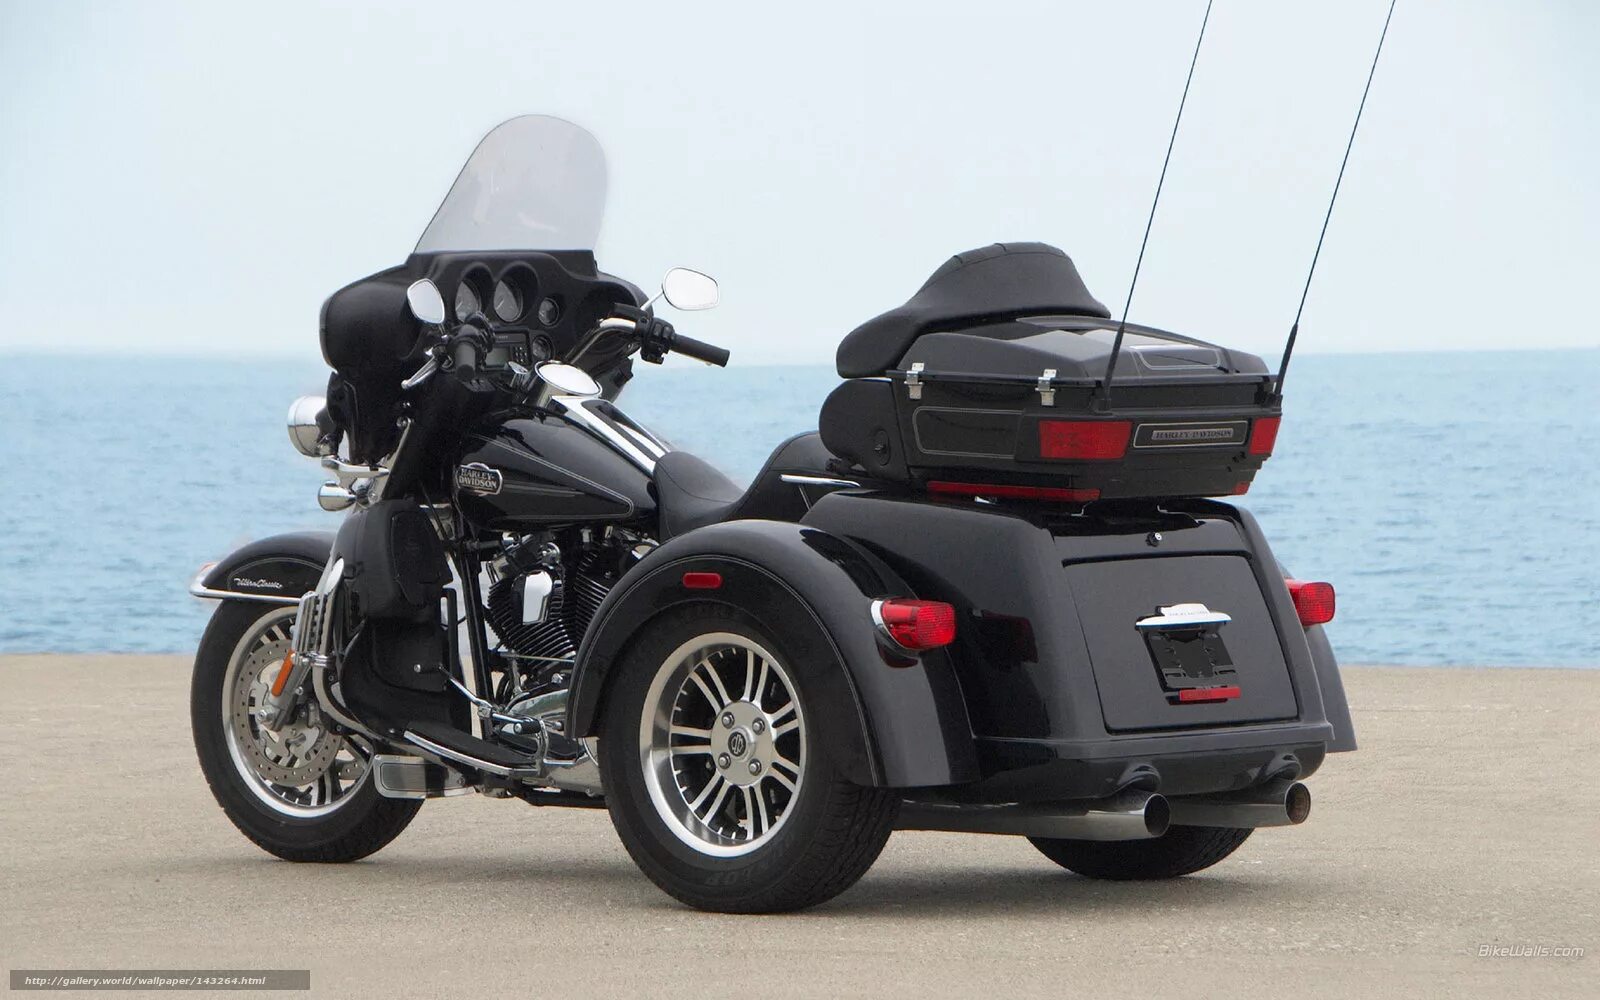 Купить на 3 мотоцикл. Мотоцикл Харлей Дэвидсон 3 колесный. Харлей Дэвидсон трехколесный. Harley Davidson tri Glide Ultra. Трёхколёсный мотоцикл Harley Davidson.